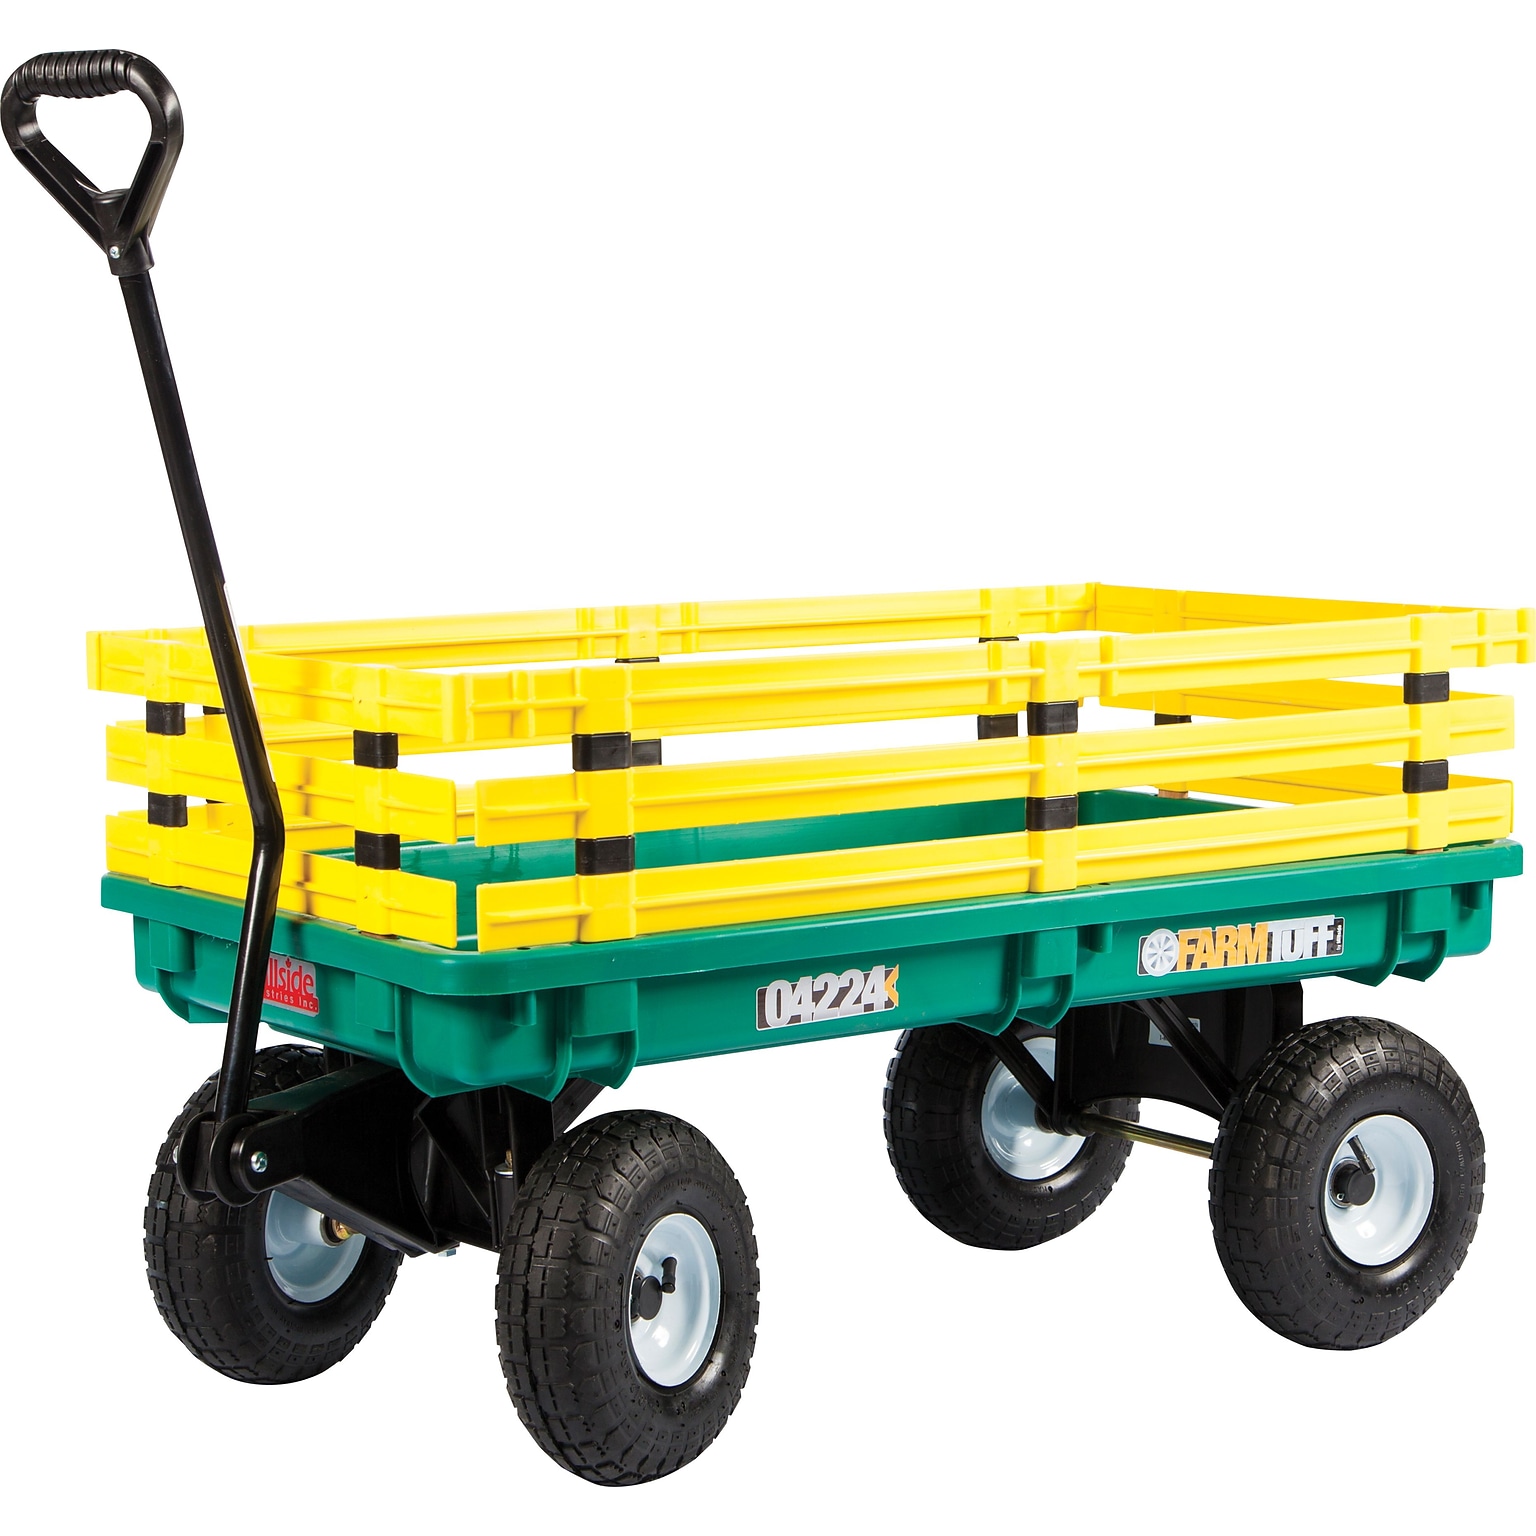 Millside Industries Polypropylene 20 x 38 Kids Wagon, Green With Yellow